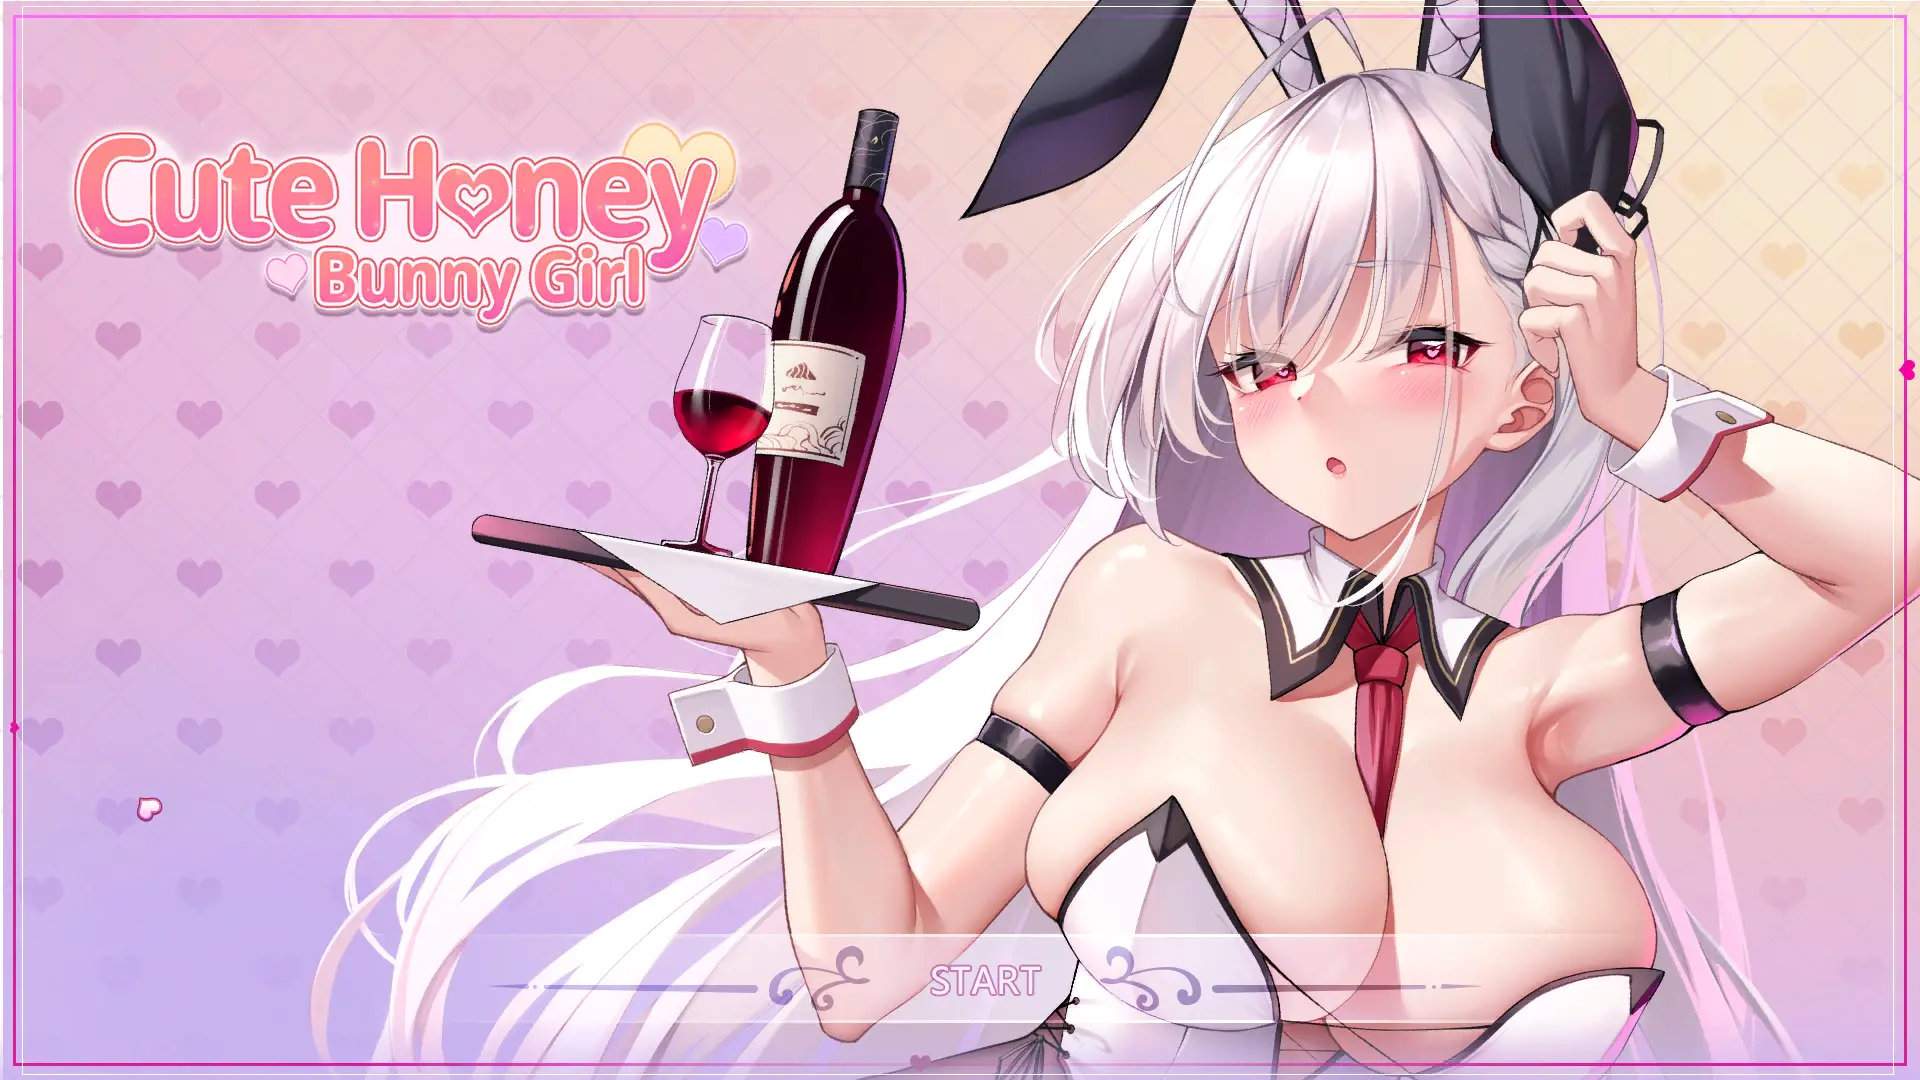 Cute Honey: Bunny Girl main image